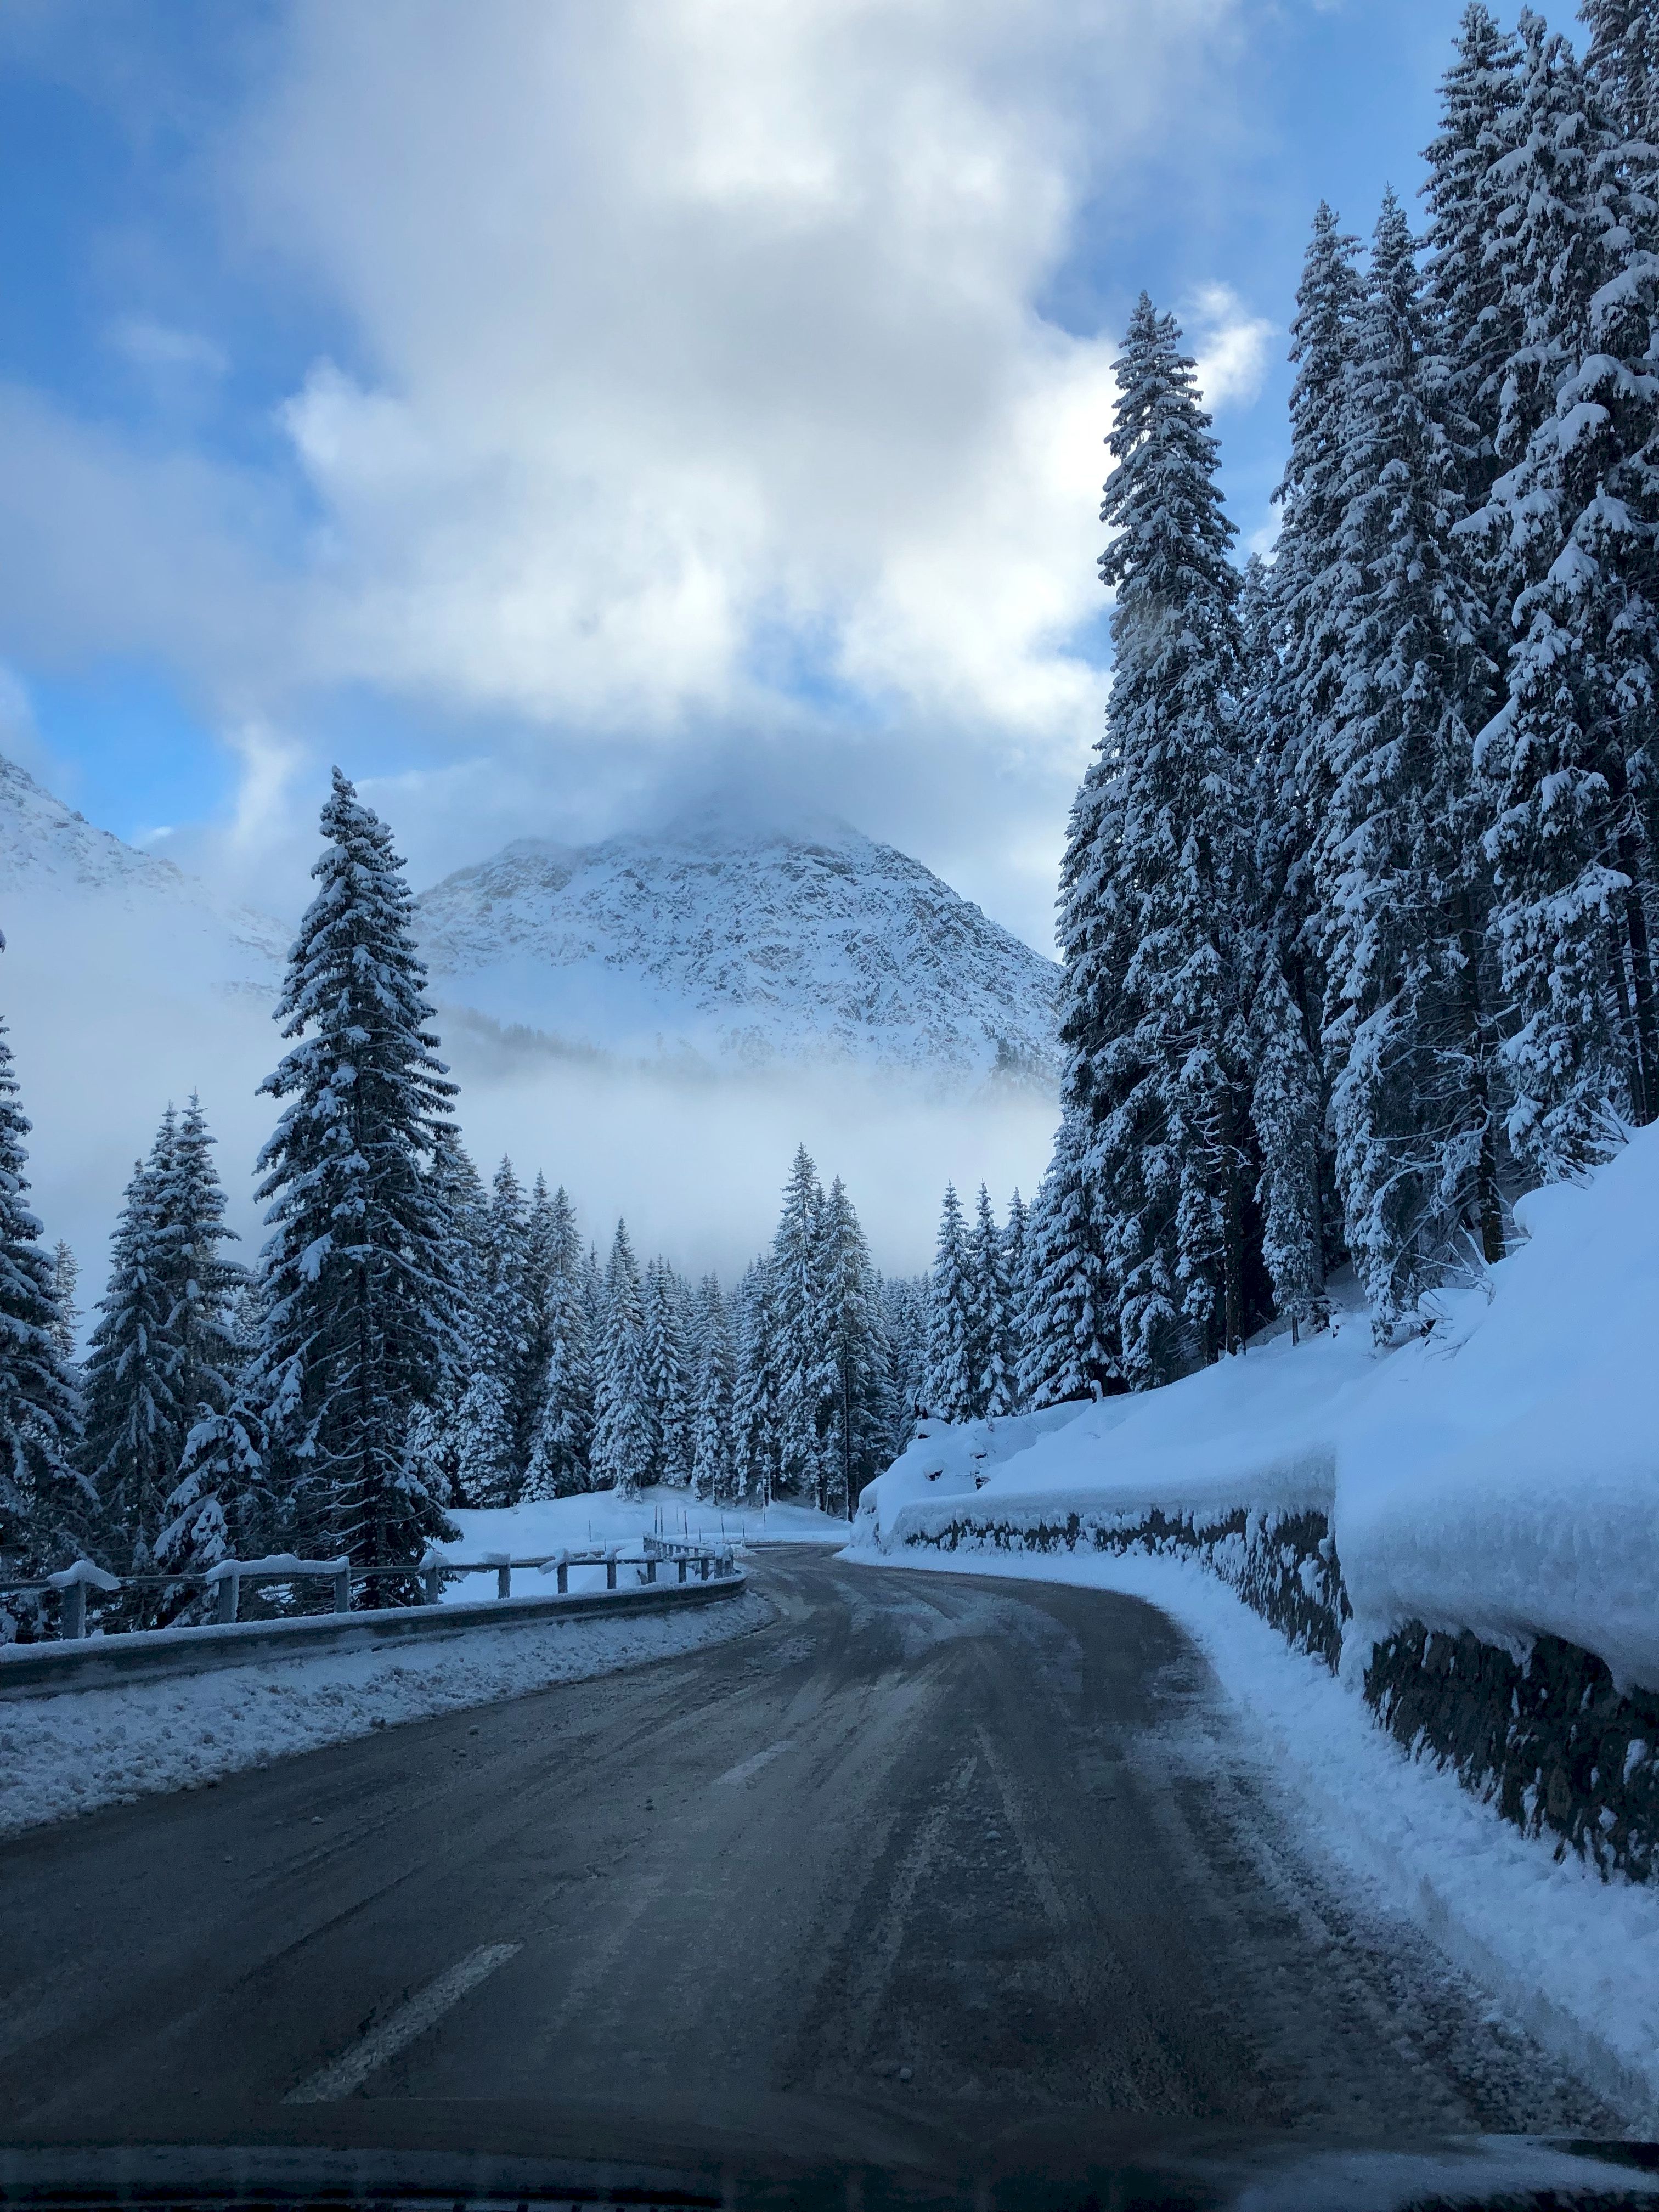 HD photos turn, mountains, trees, winter